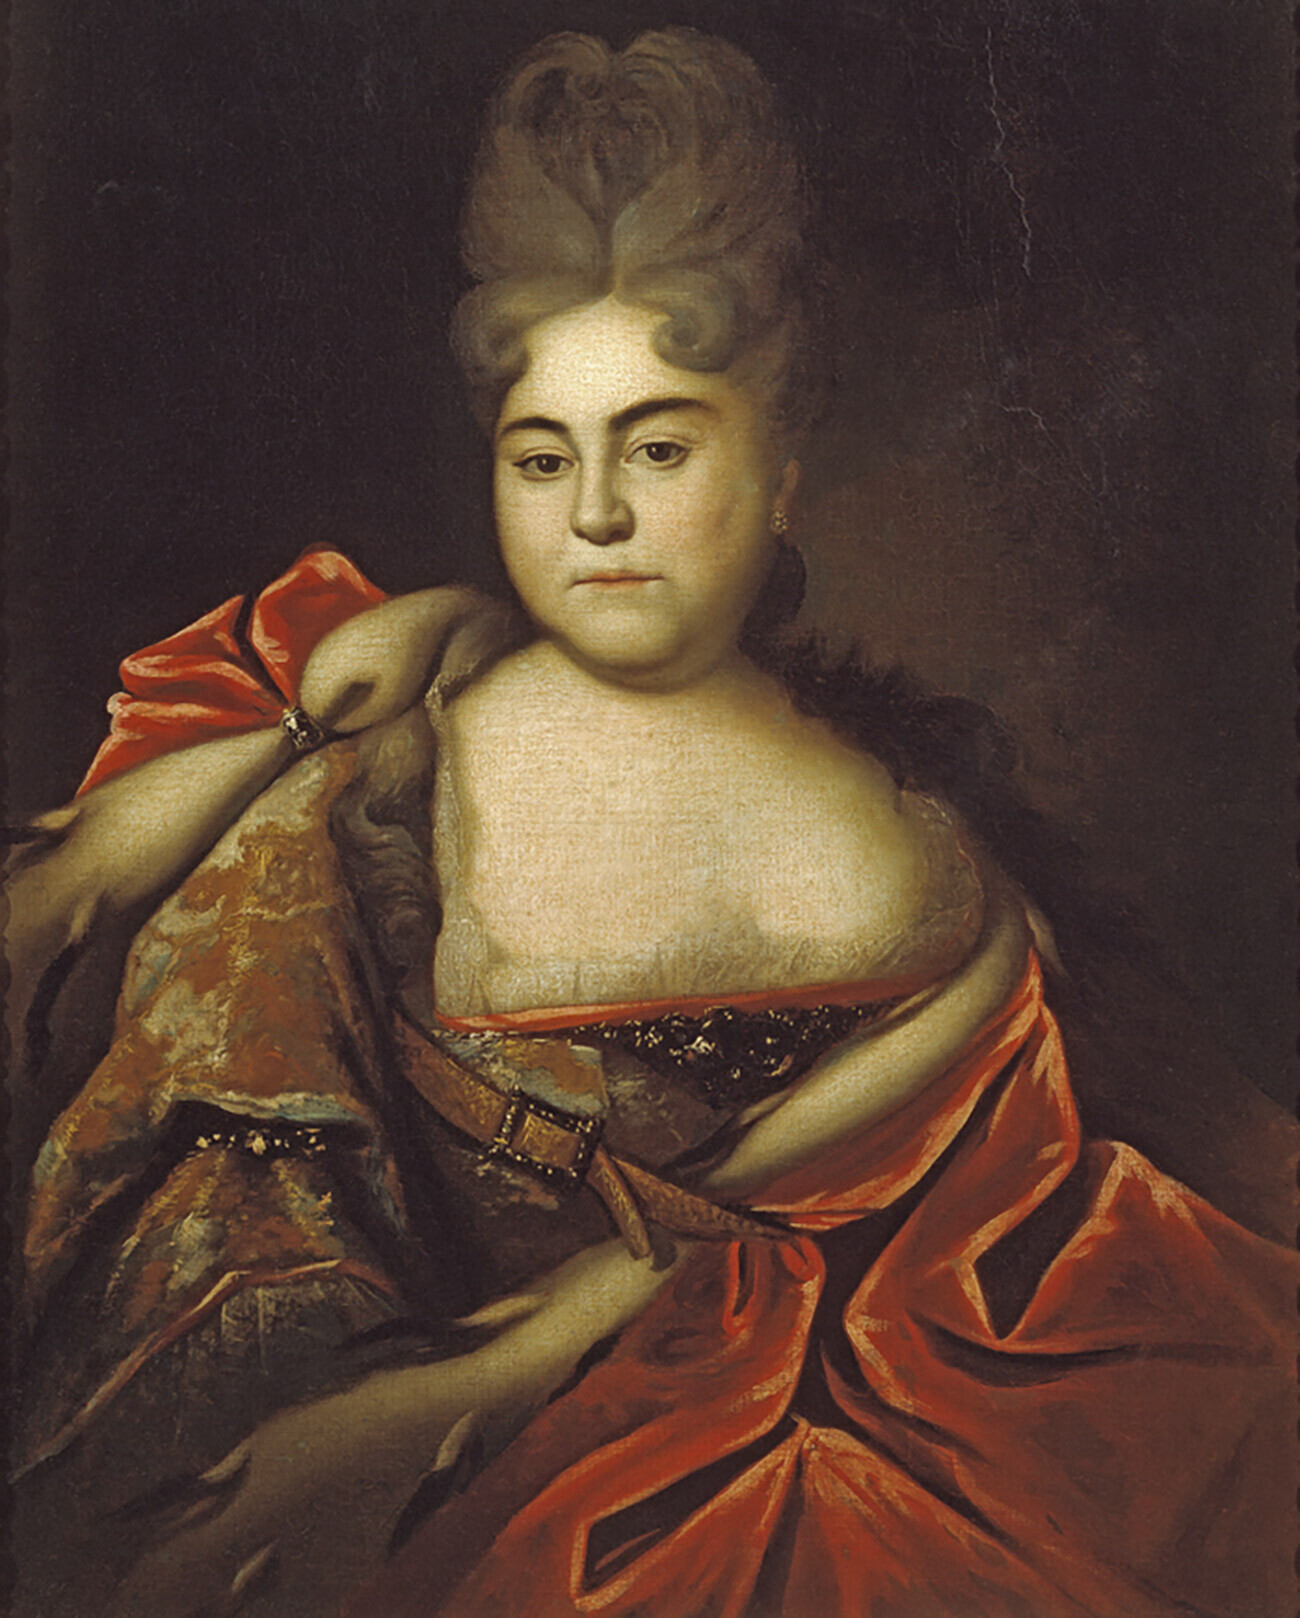 Retrato de princesa Natália Alekseievna (1673-1716)

